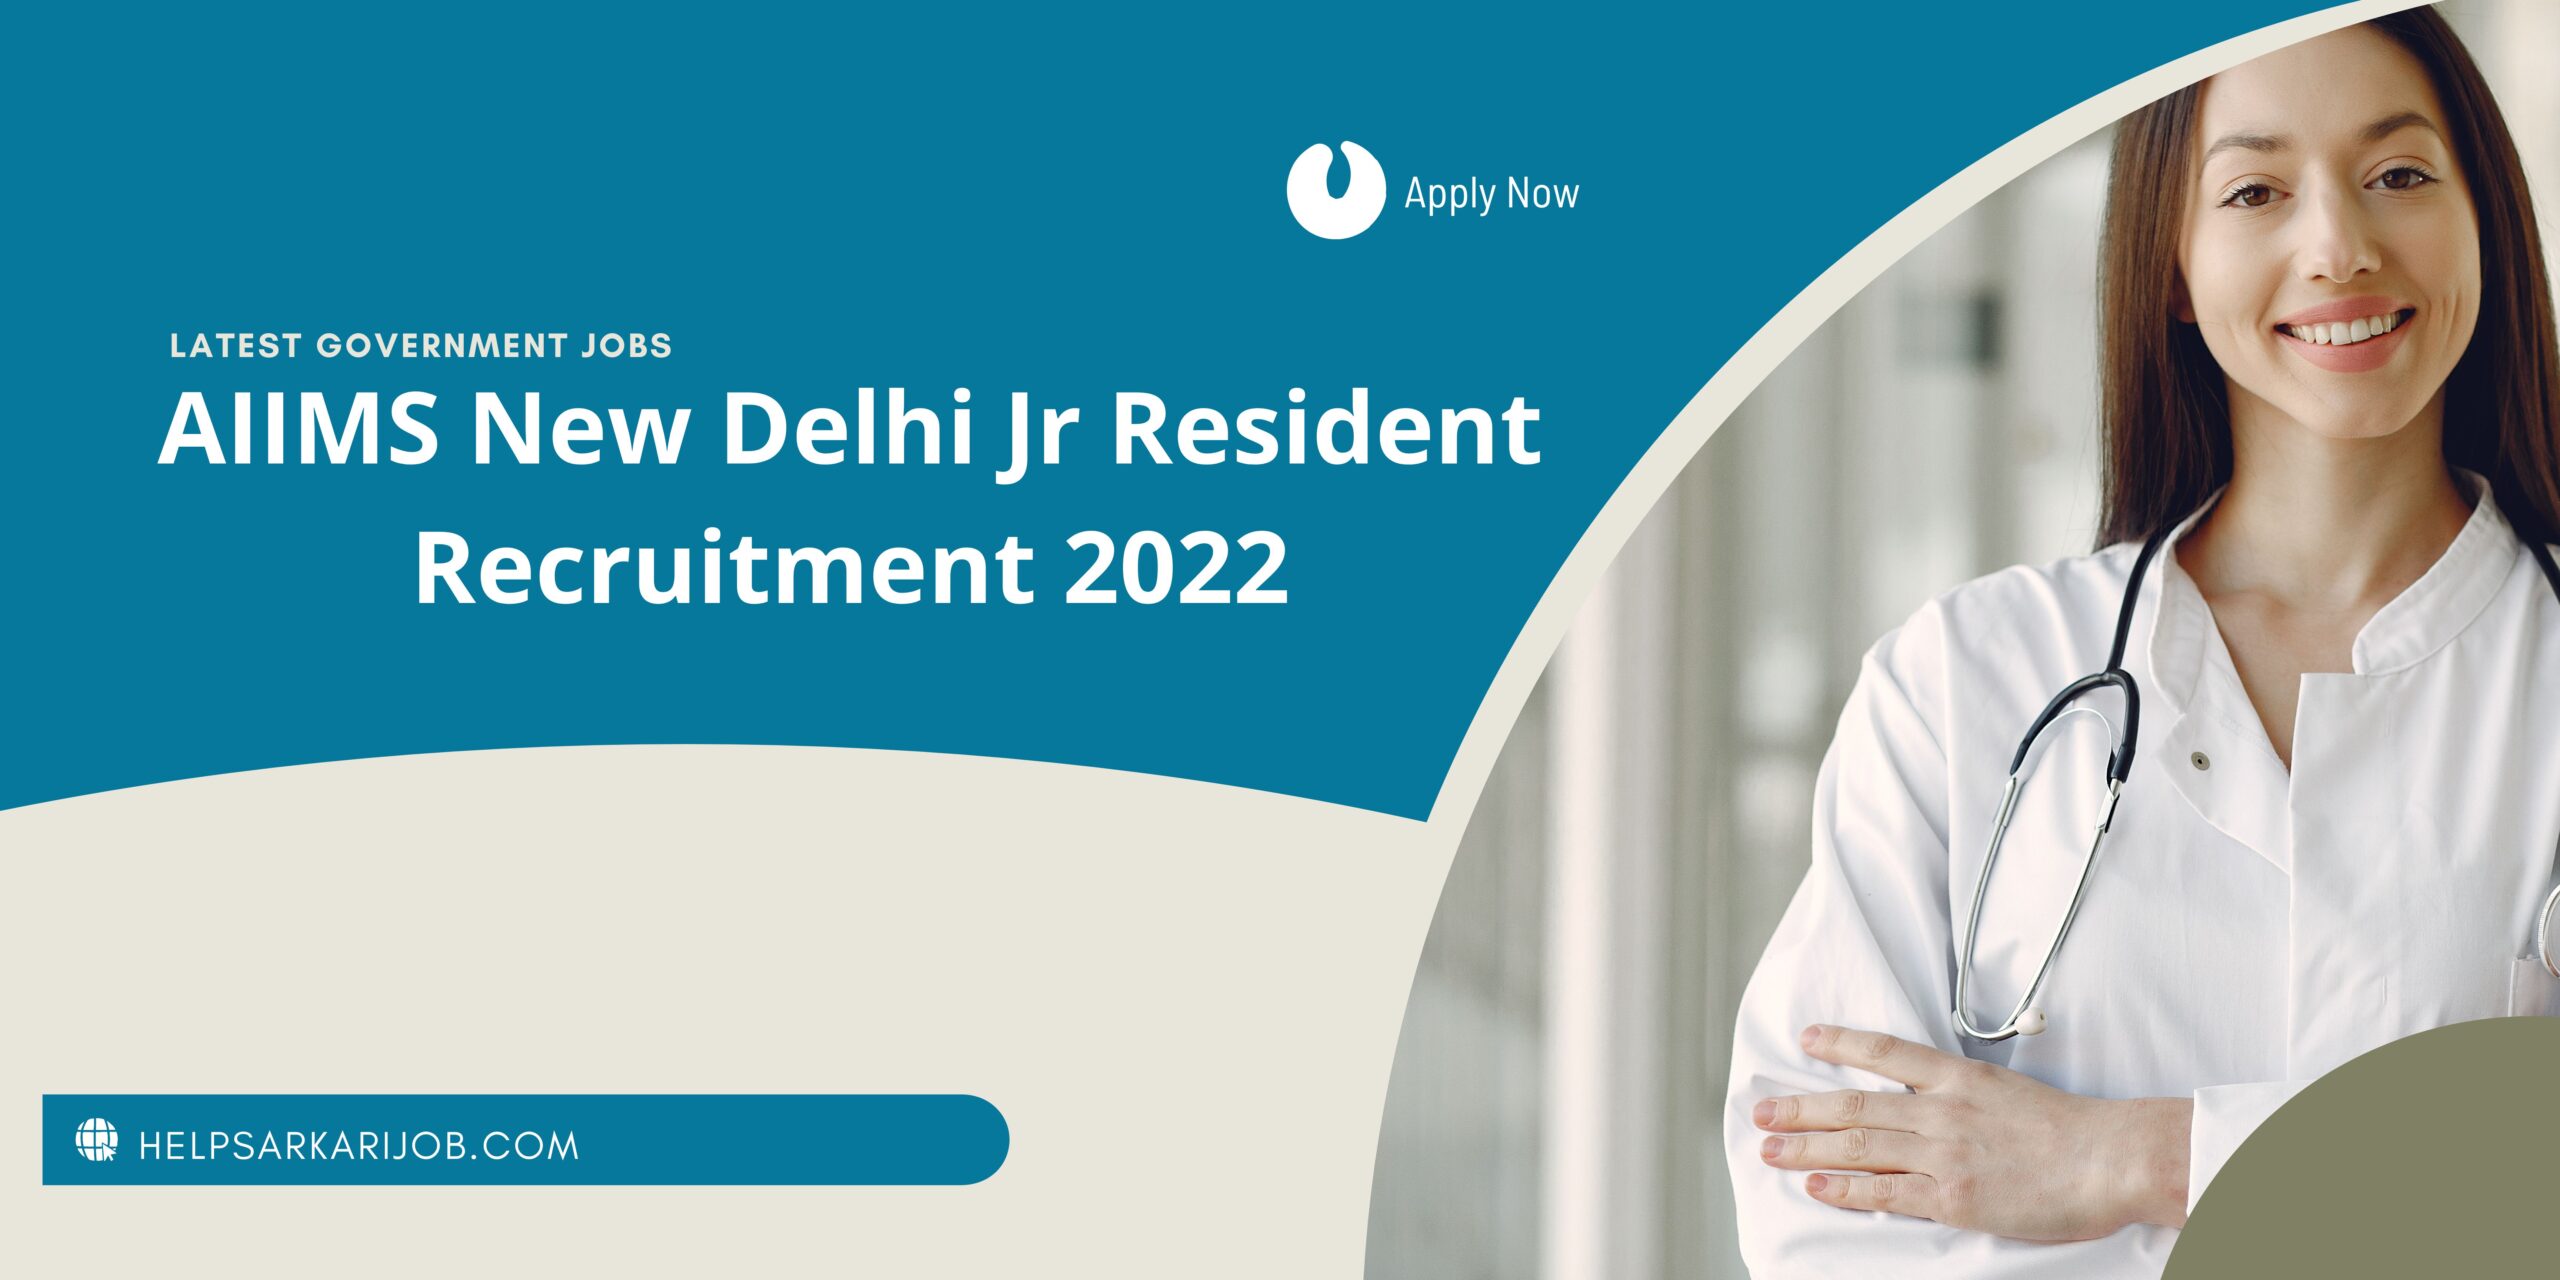 AIIMS New Delhi Jr Resident Recruitment 2022 scaled -